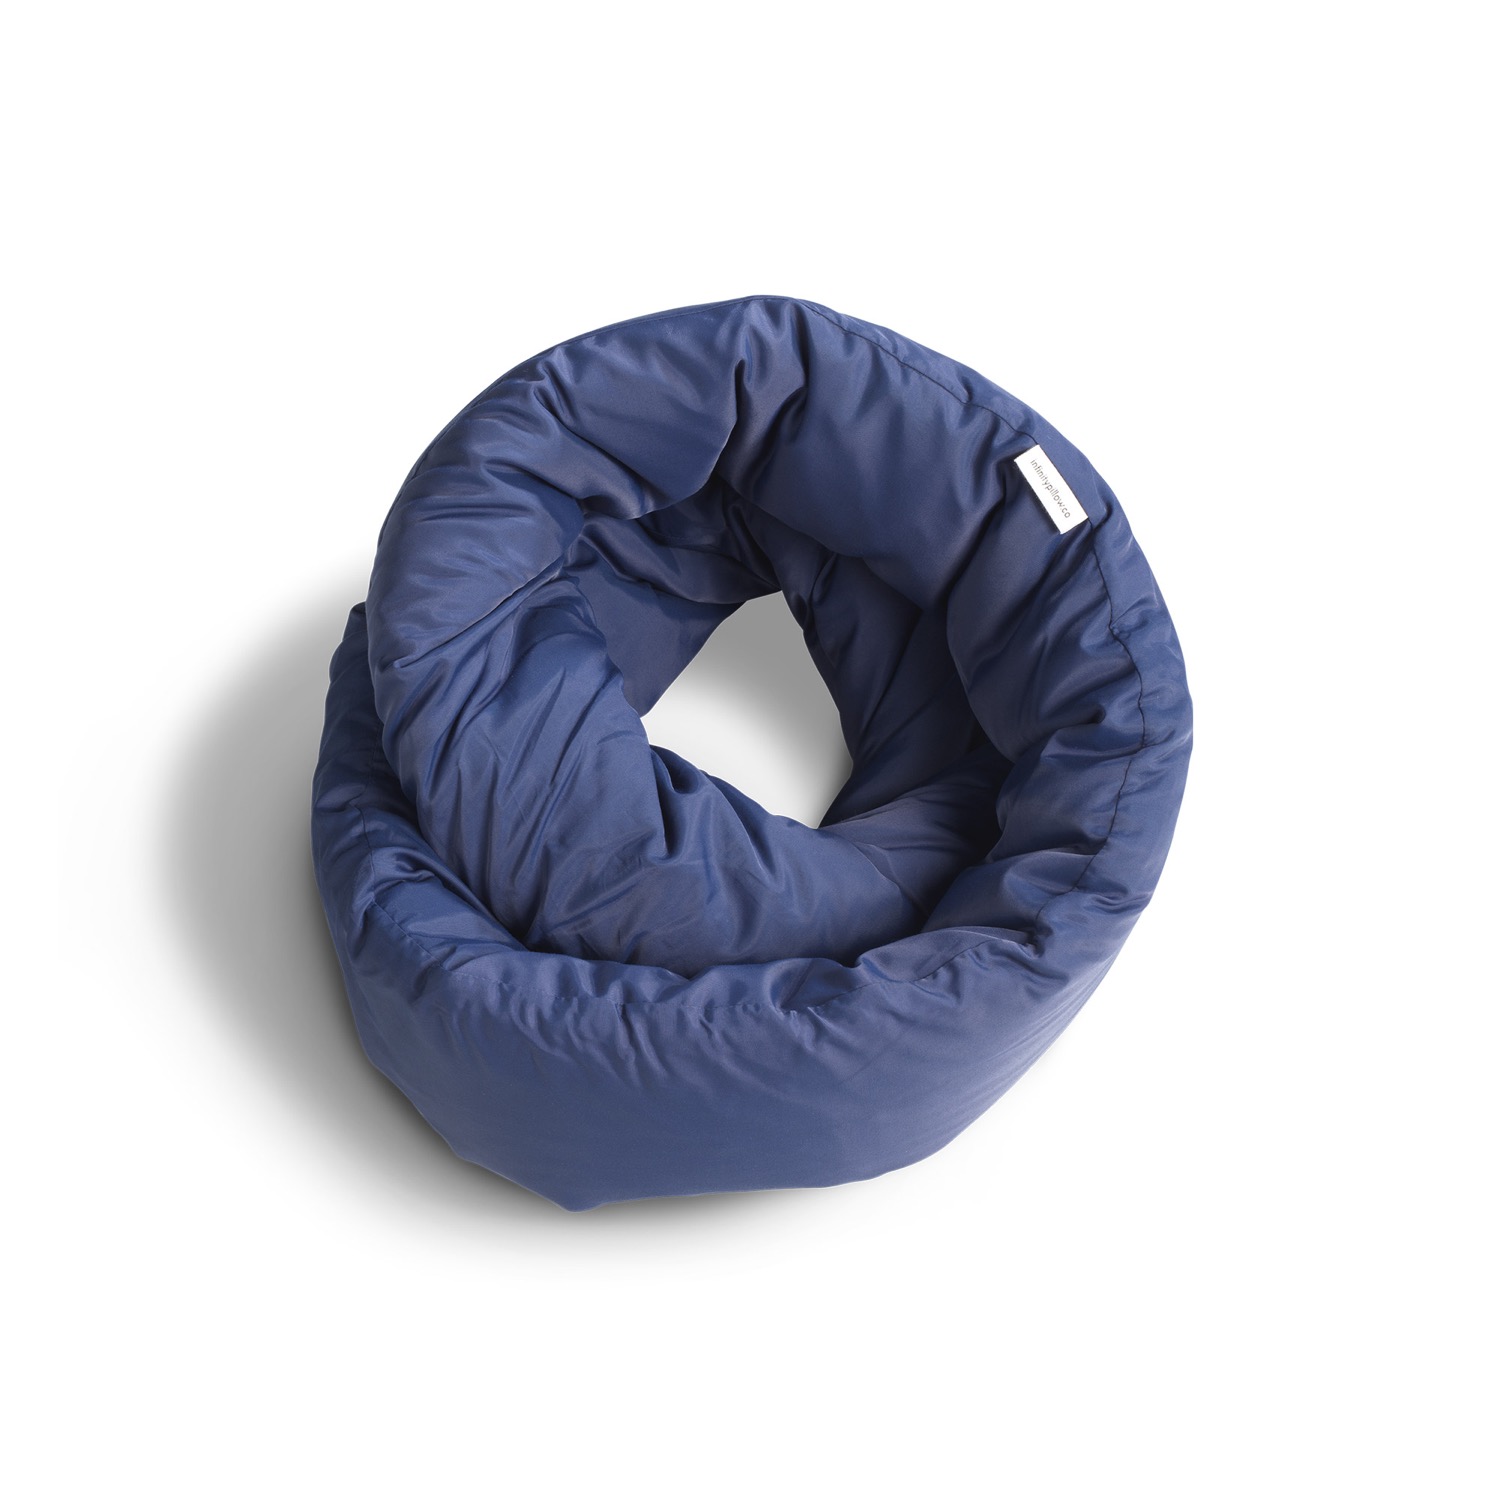 Infinity pillow - tour de cou (bleu)